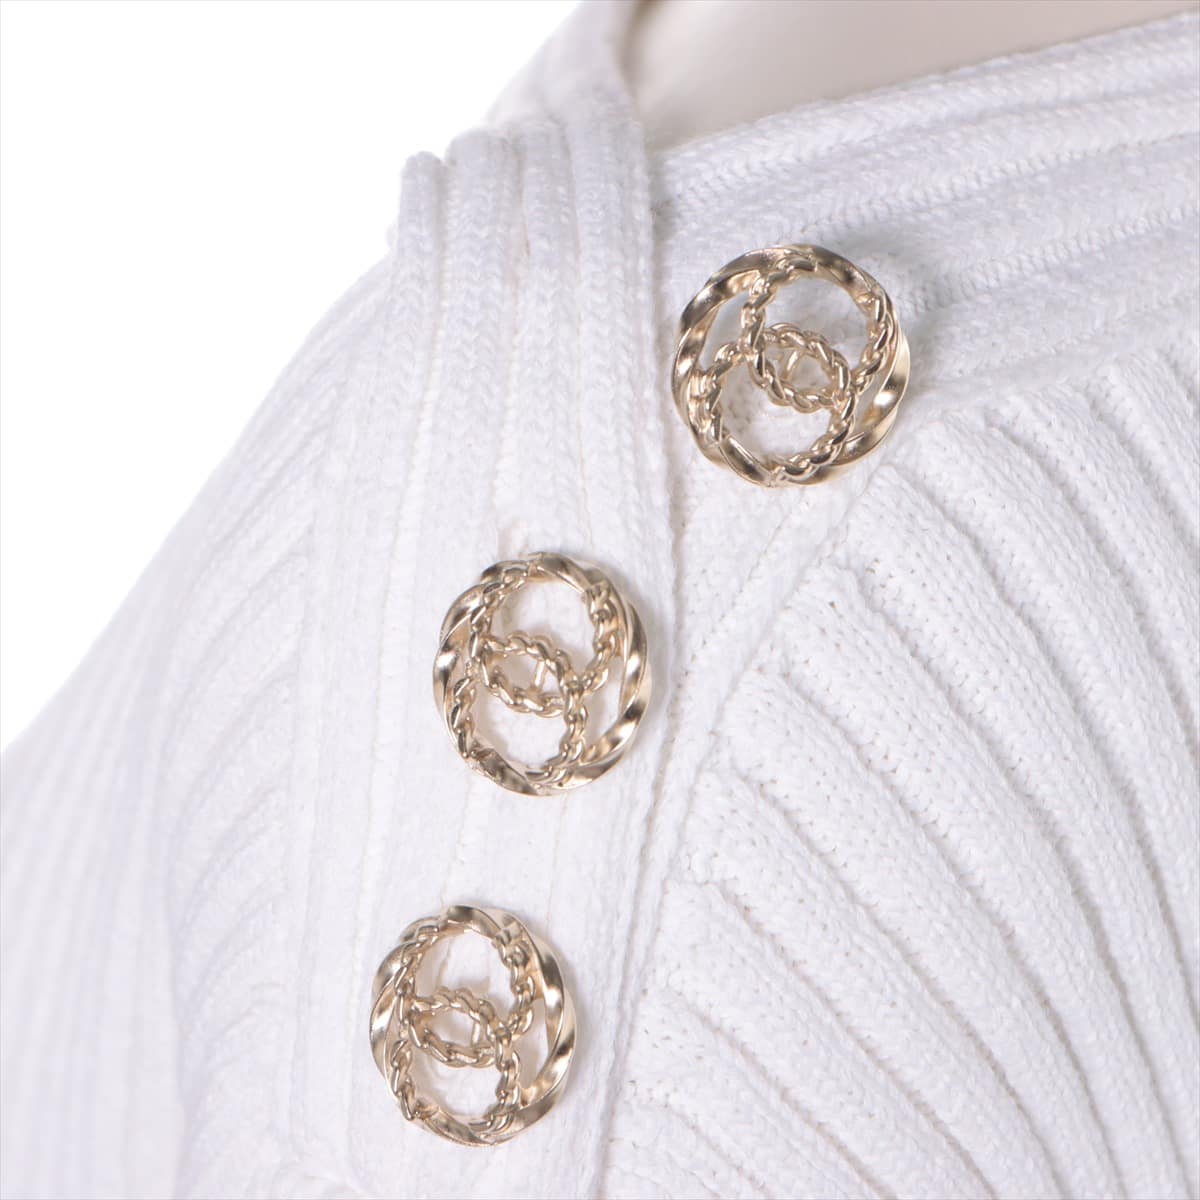 Chanel Coco Button P63 Cotton Knit dress 38 Ladies' White